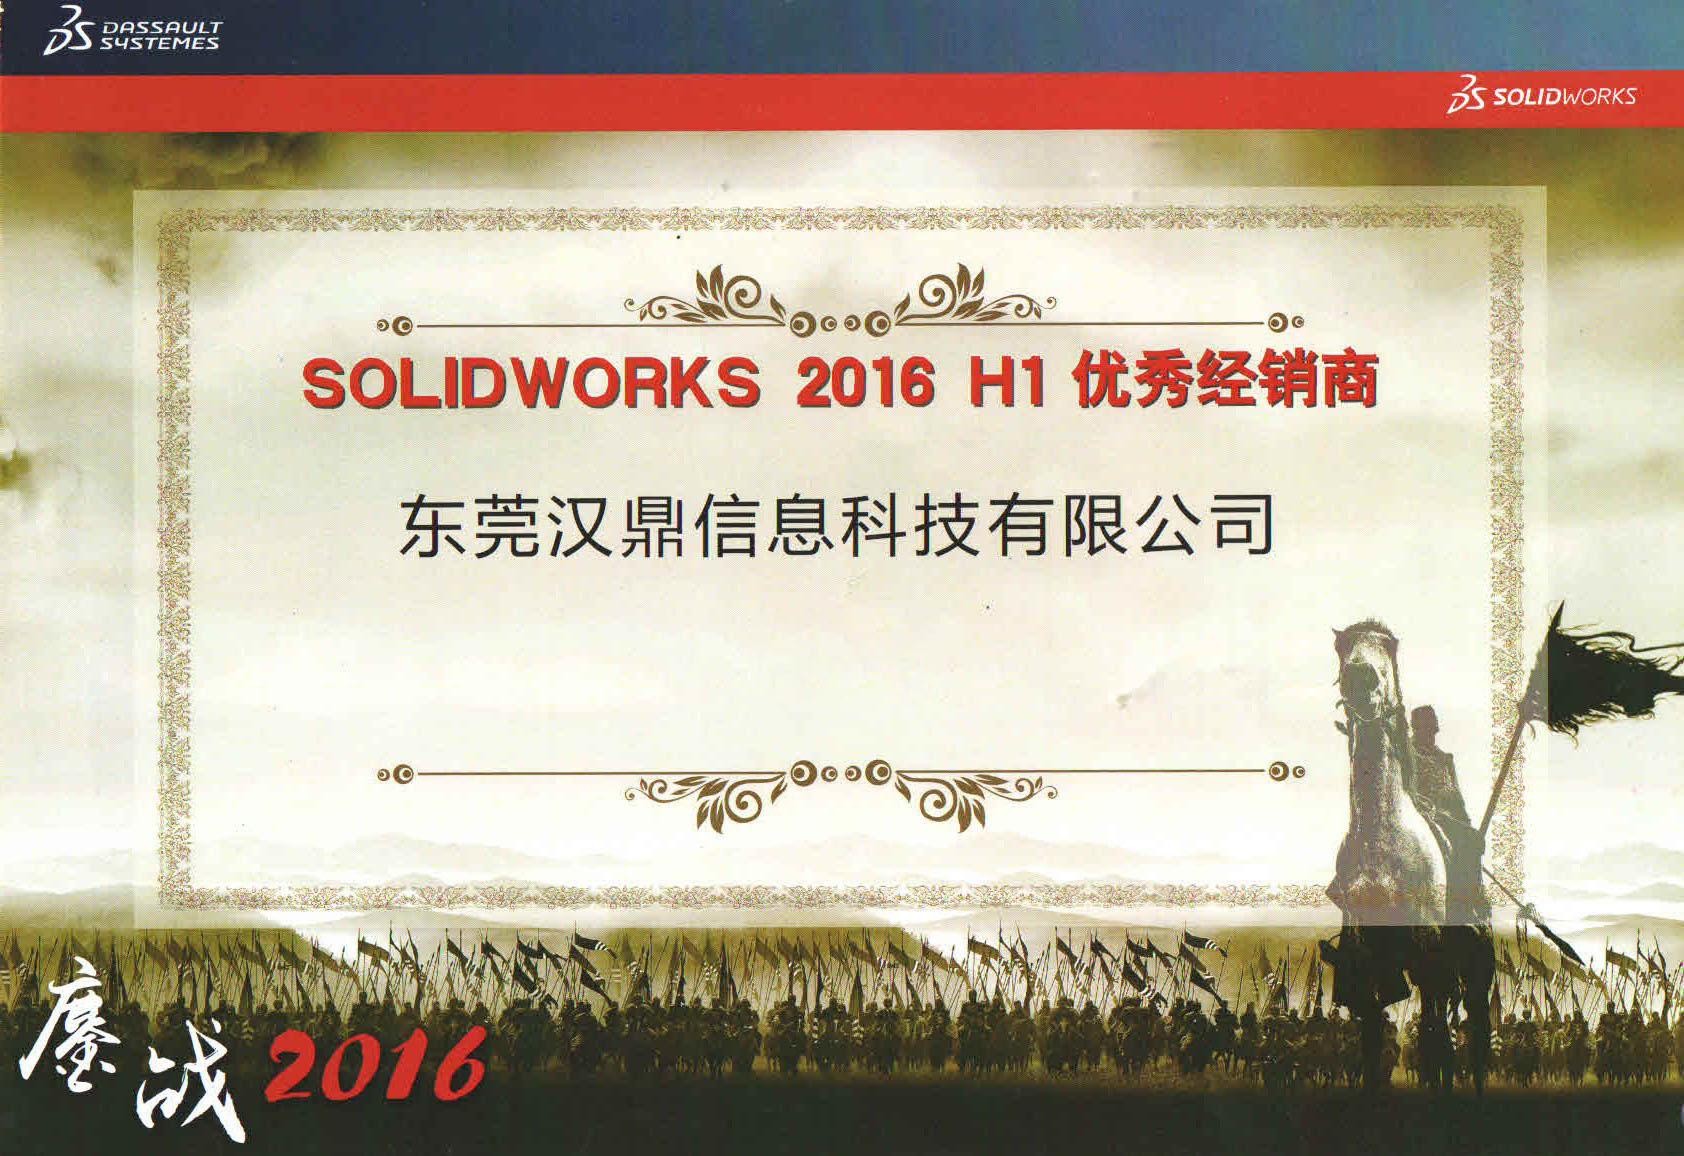 SOLIDWORKS 2016 H1优秀经销商